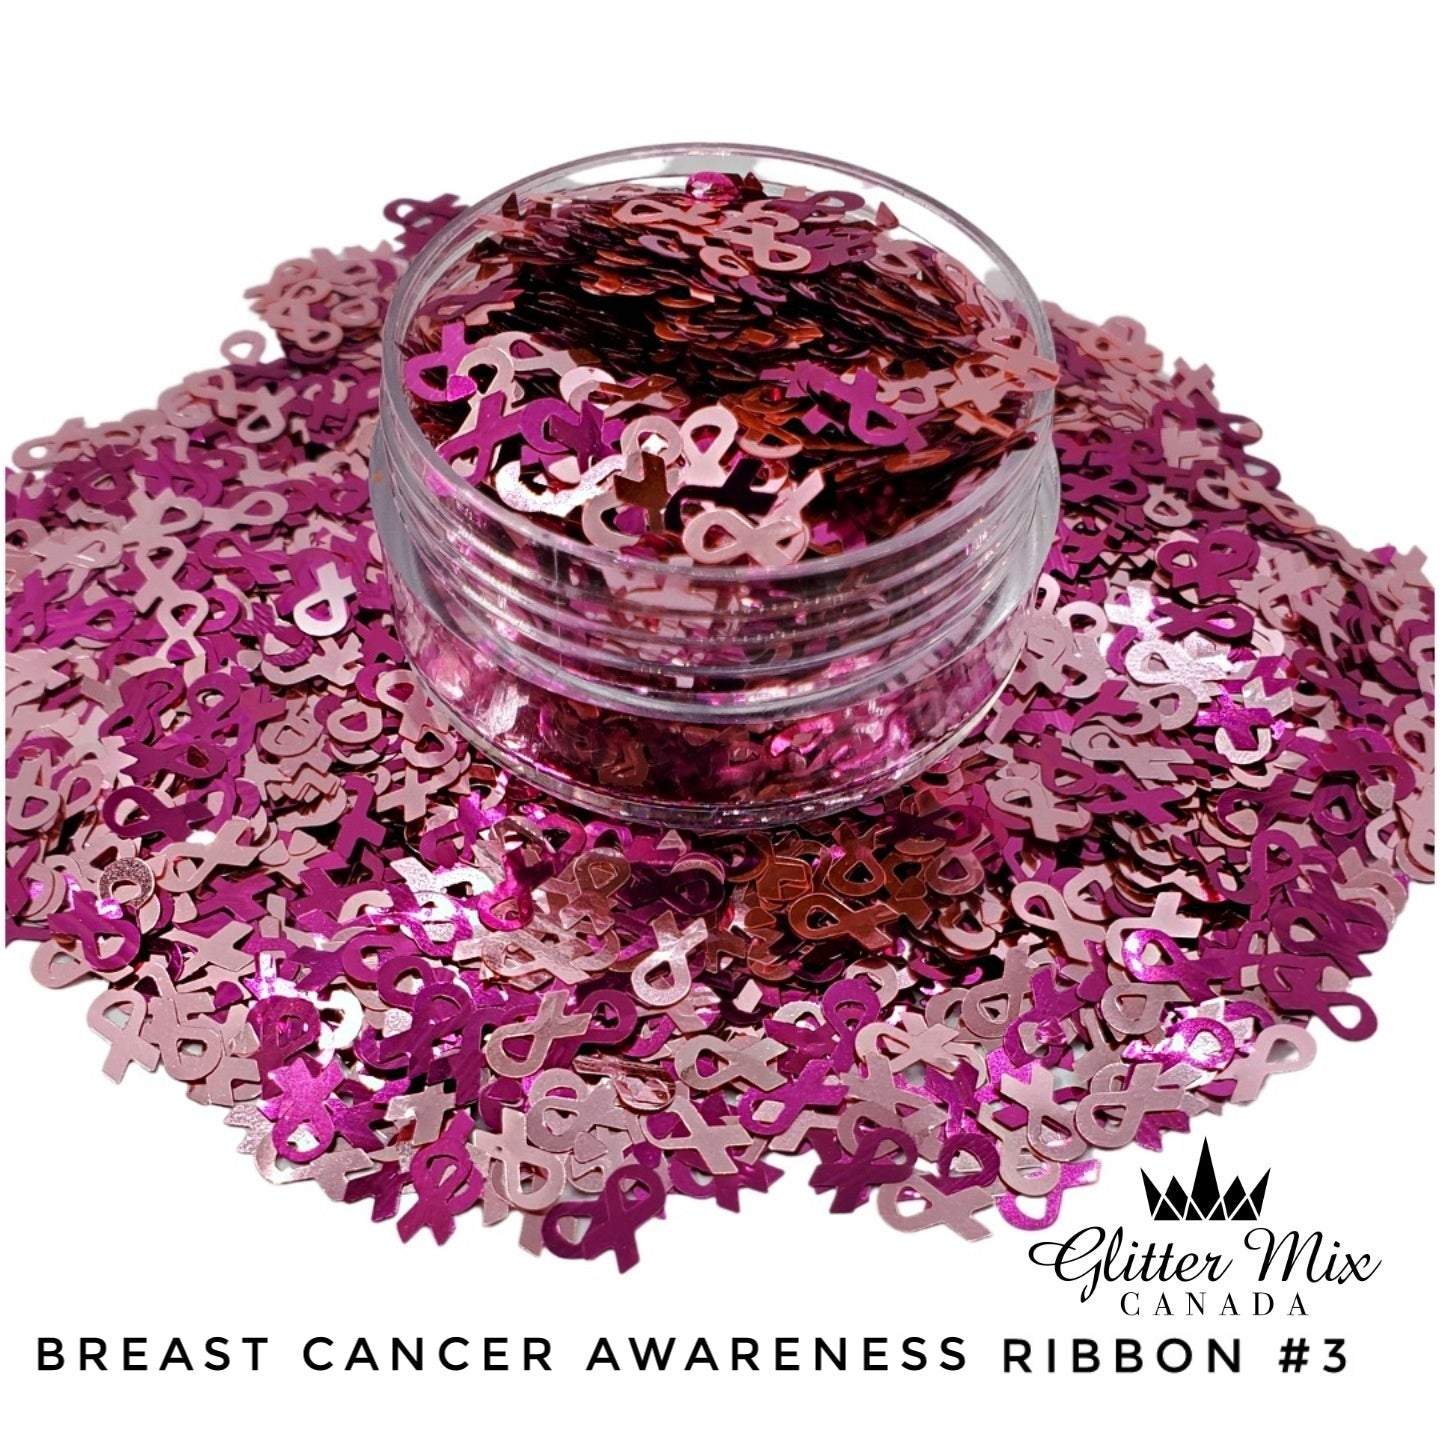 205-Breast Cancer Awareness Ribbon #3